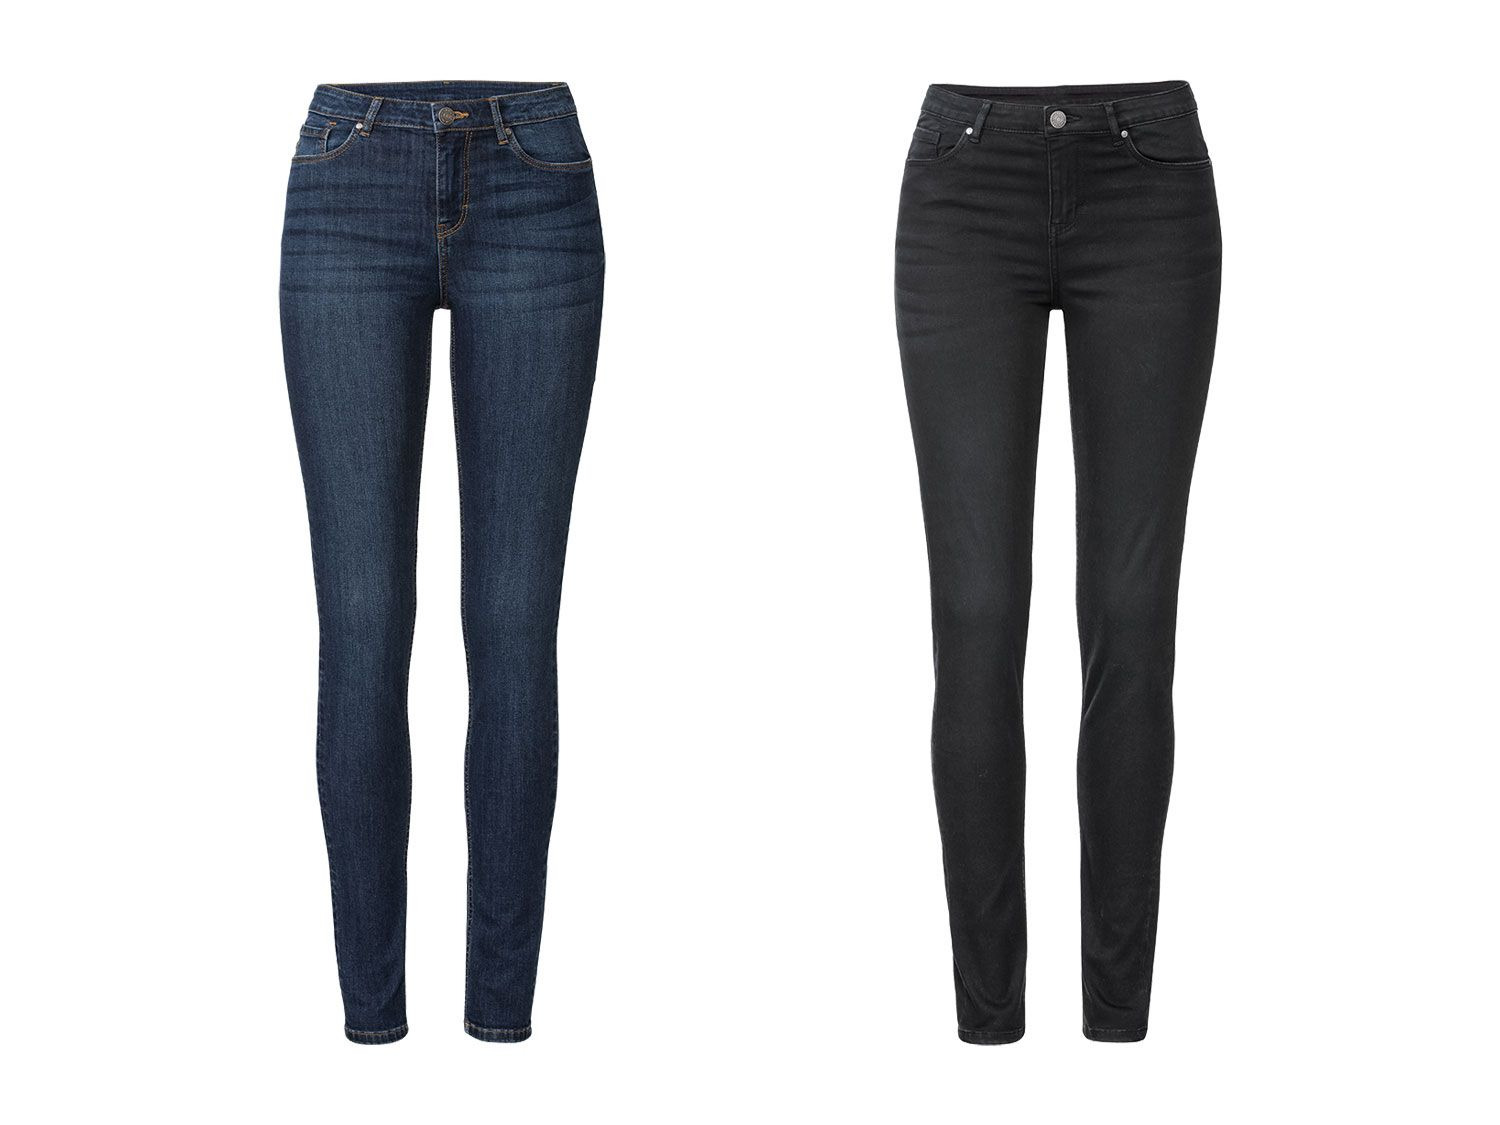 Hol Behoren theater Dames jeans super skinny fit kopen? | LIDL